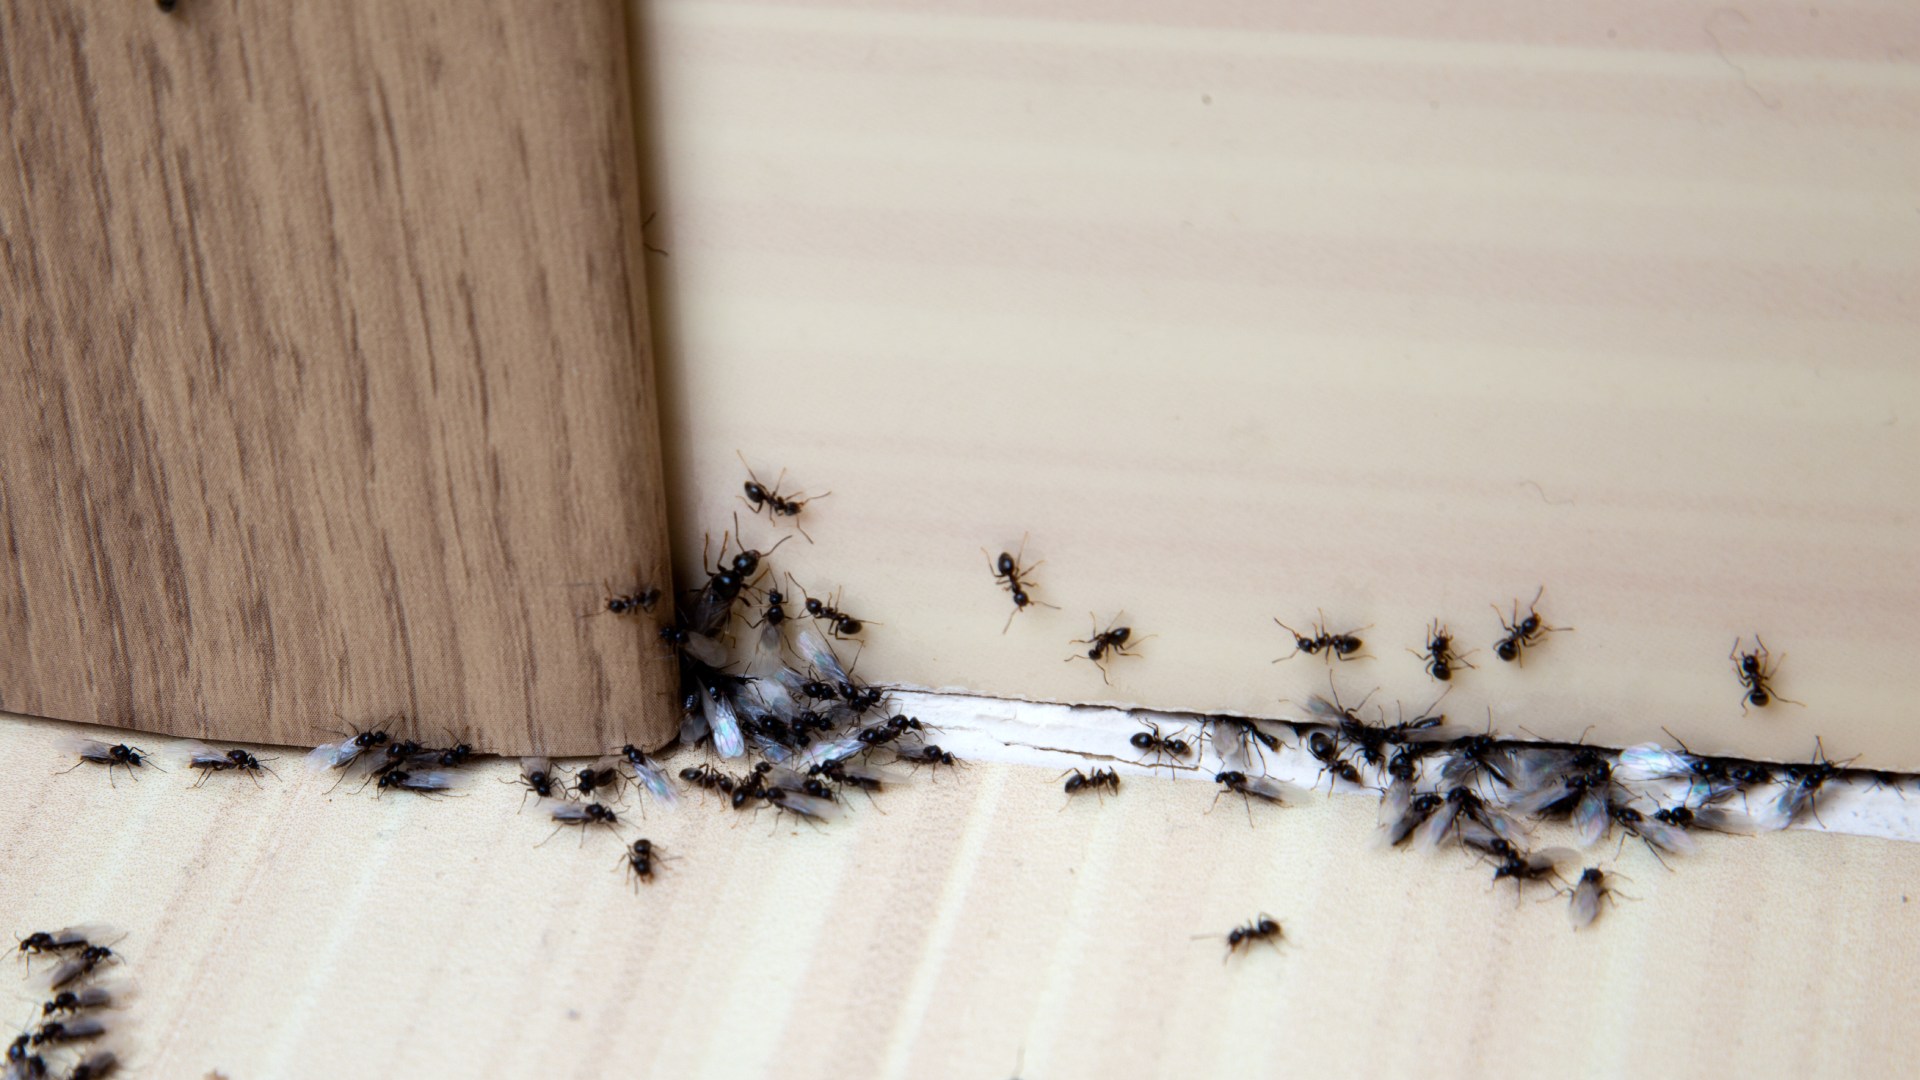 Ant infestation found in client's home in McKinney, TX.